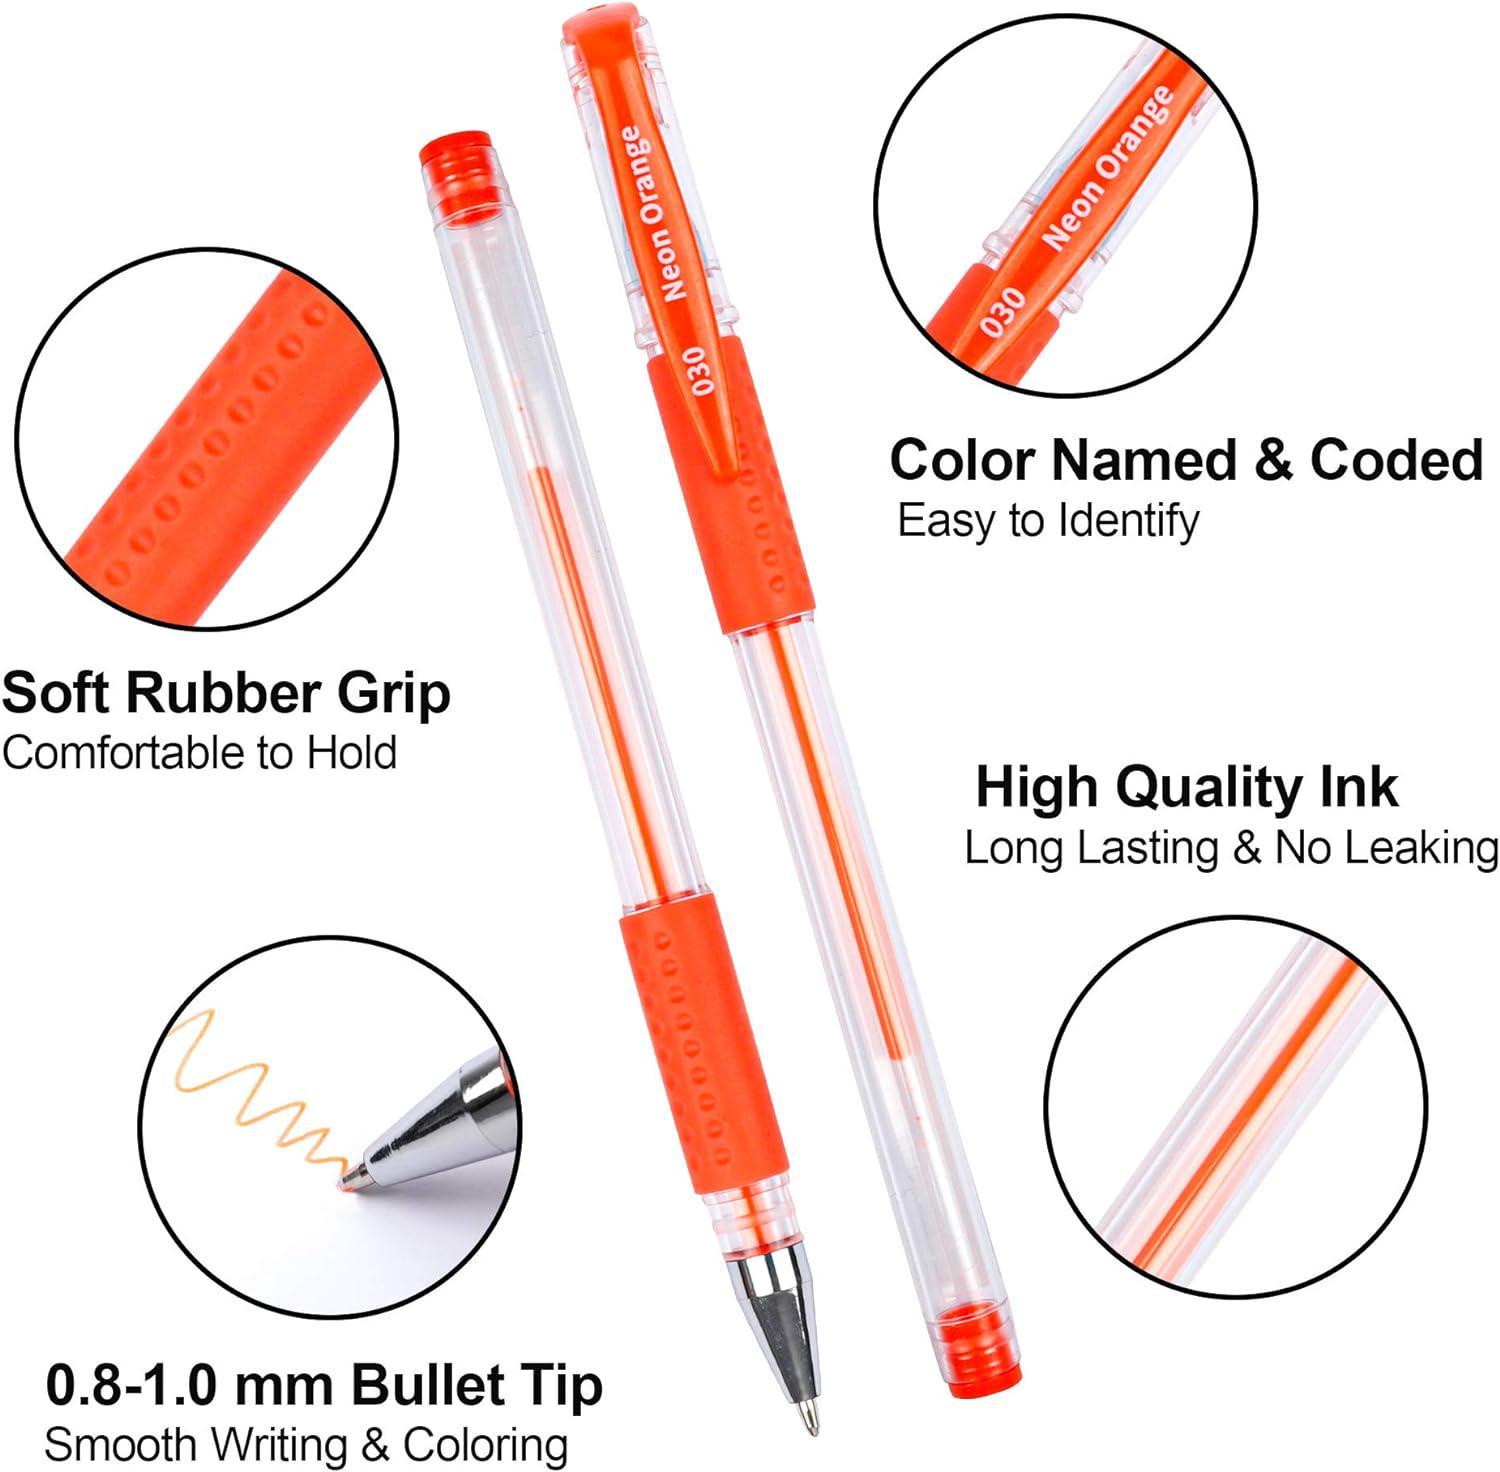  Clobeau Brush Markers Refillable Water Brush Pen for